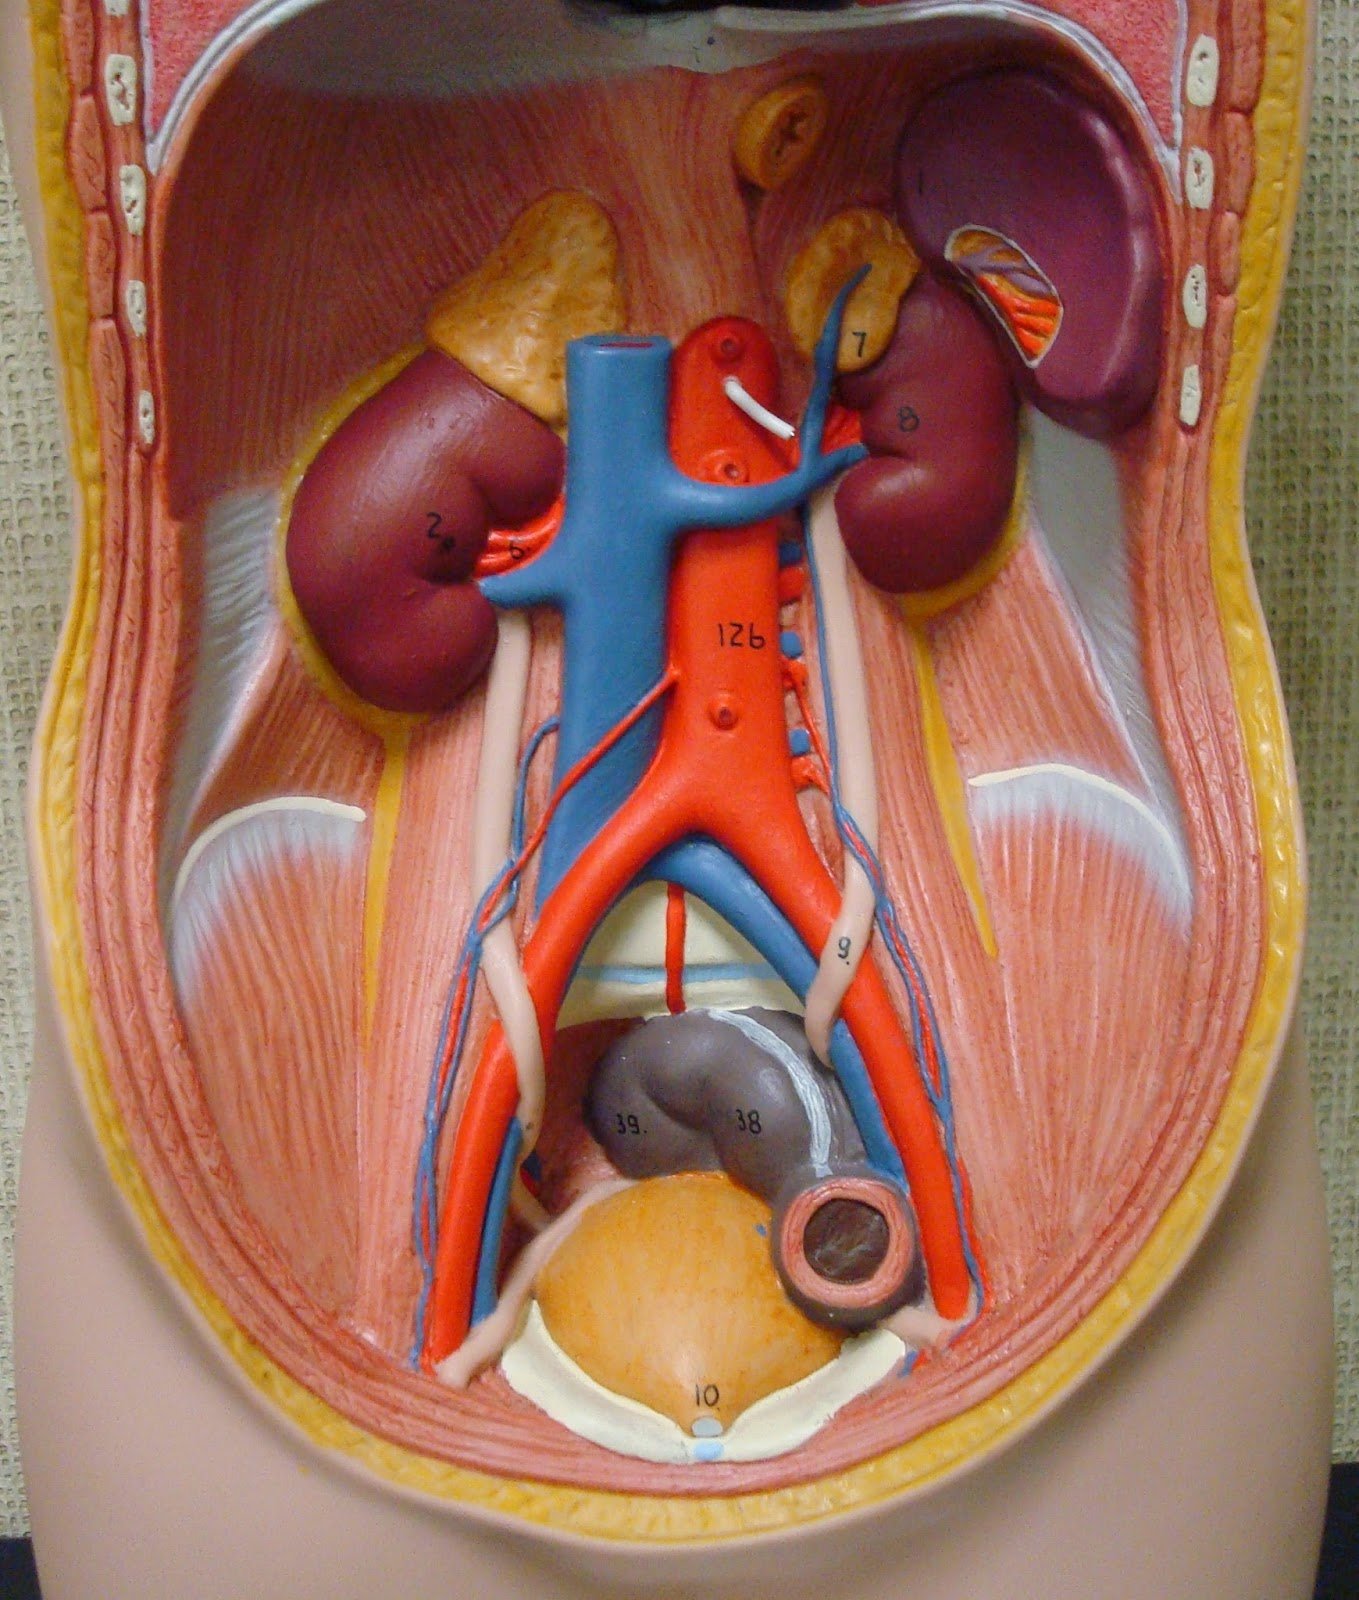 Human Medical Physiology: Renal Physiology